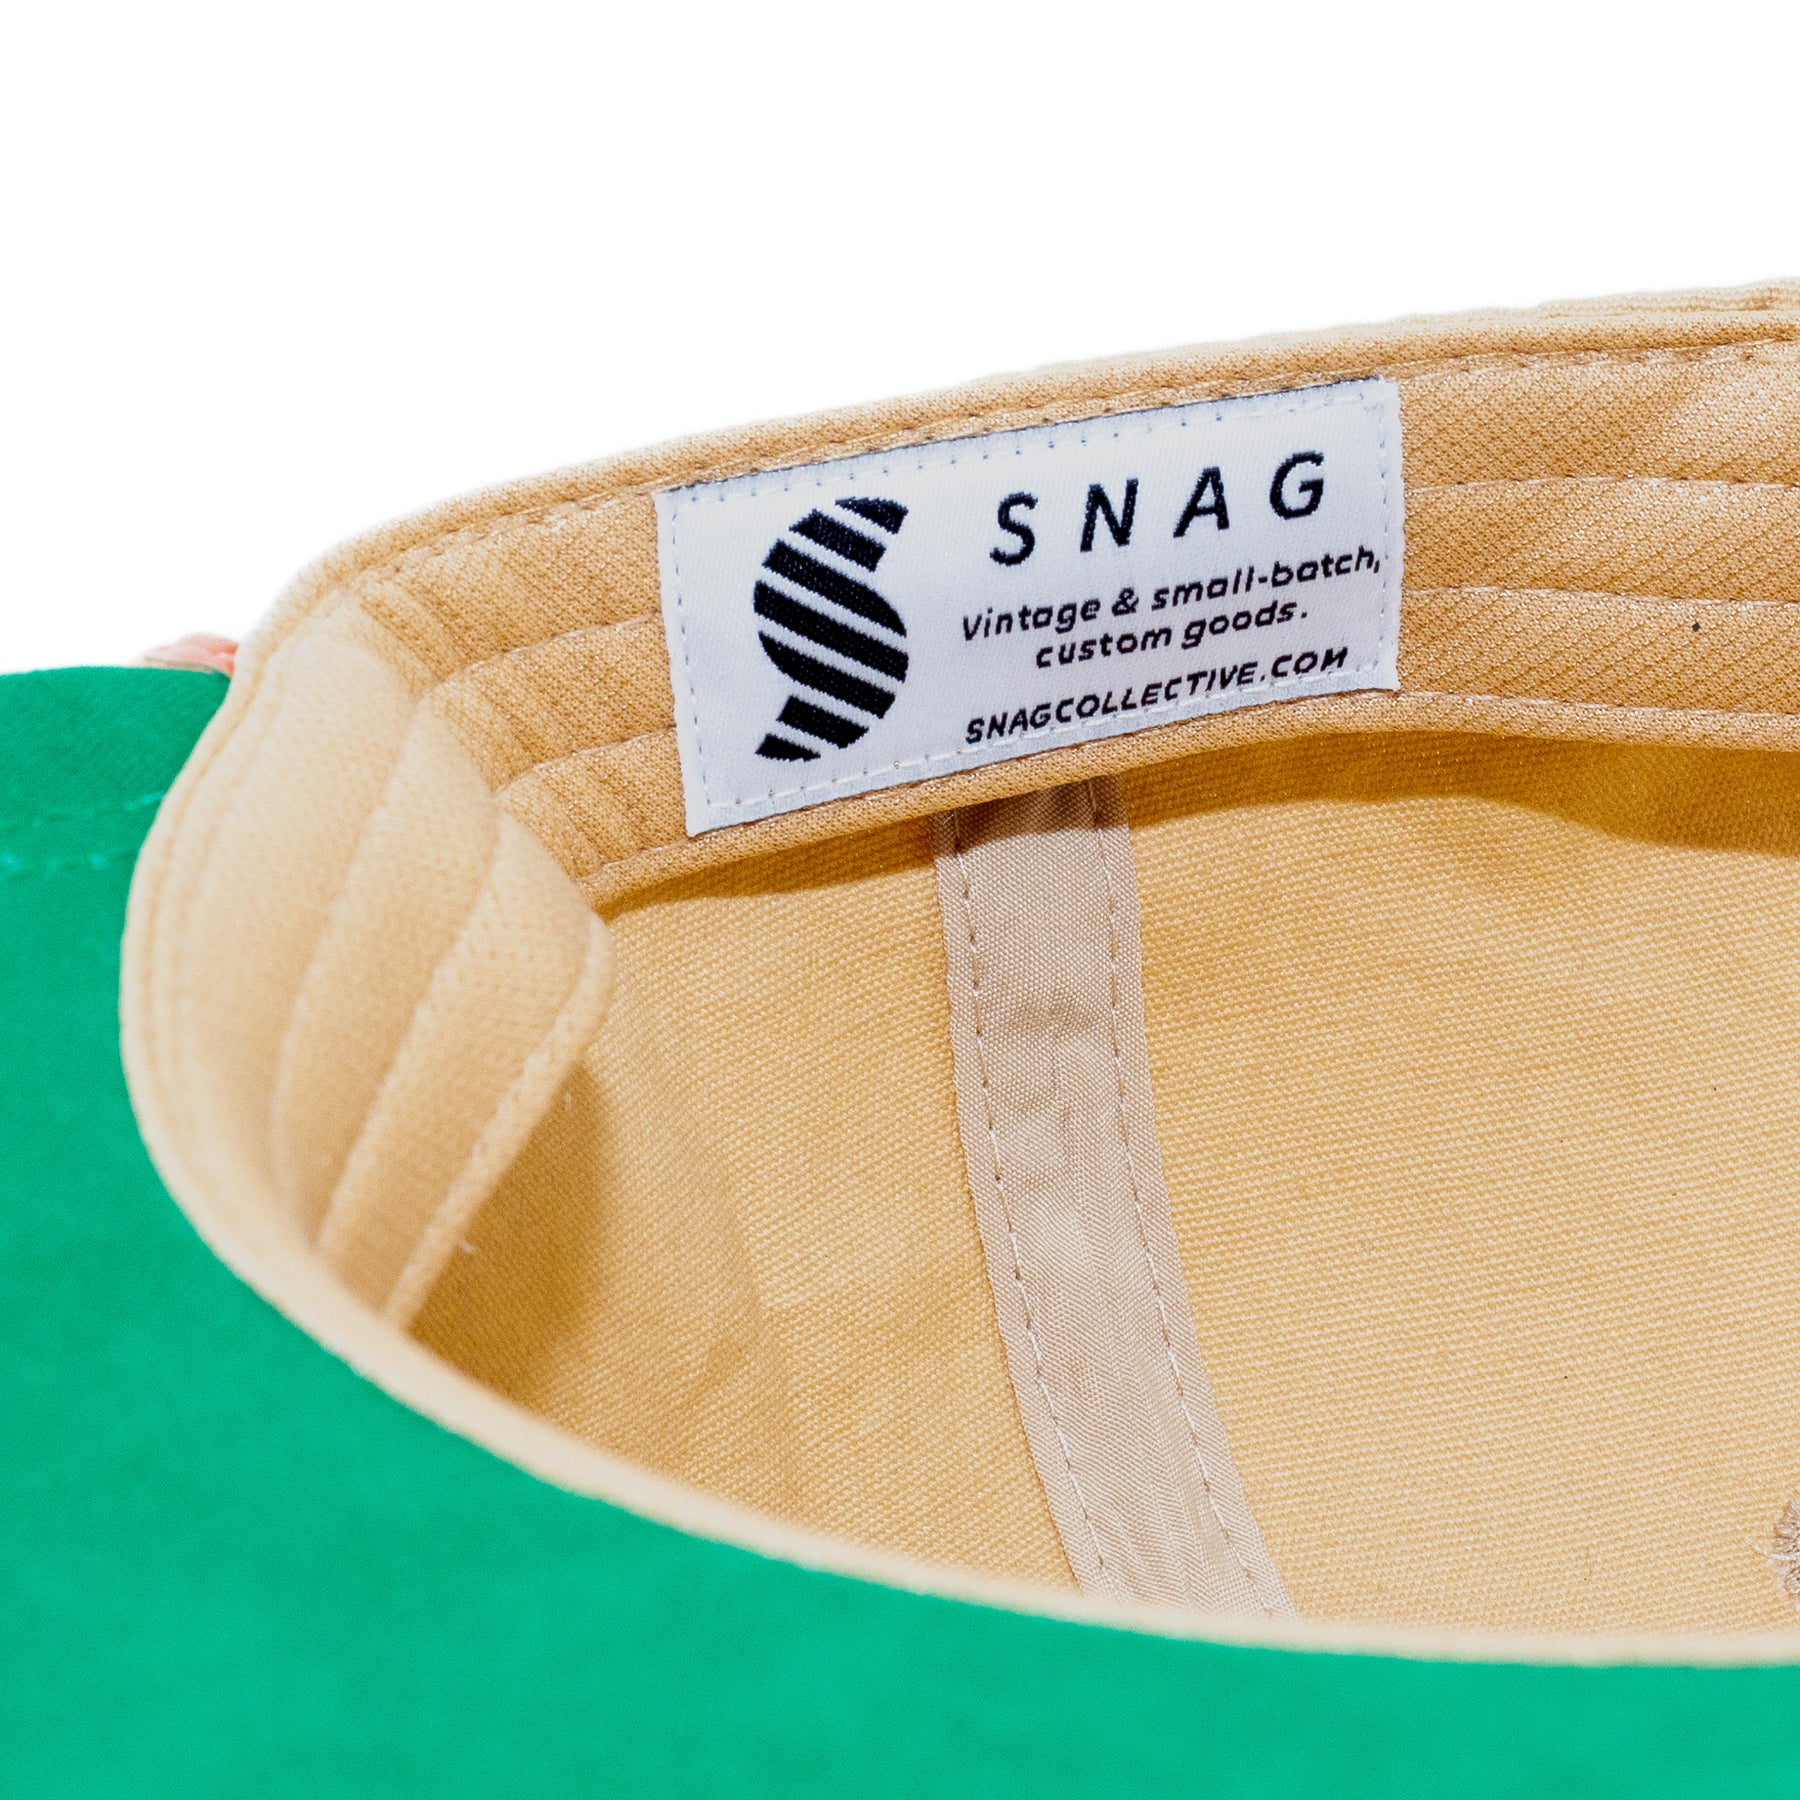 SNAG - Vintage & small-batch, custom goods.